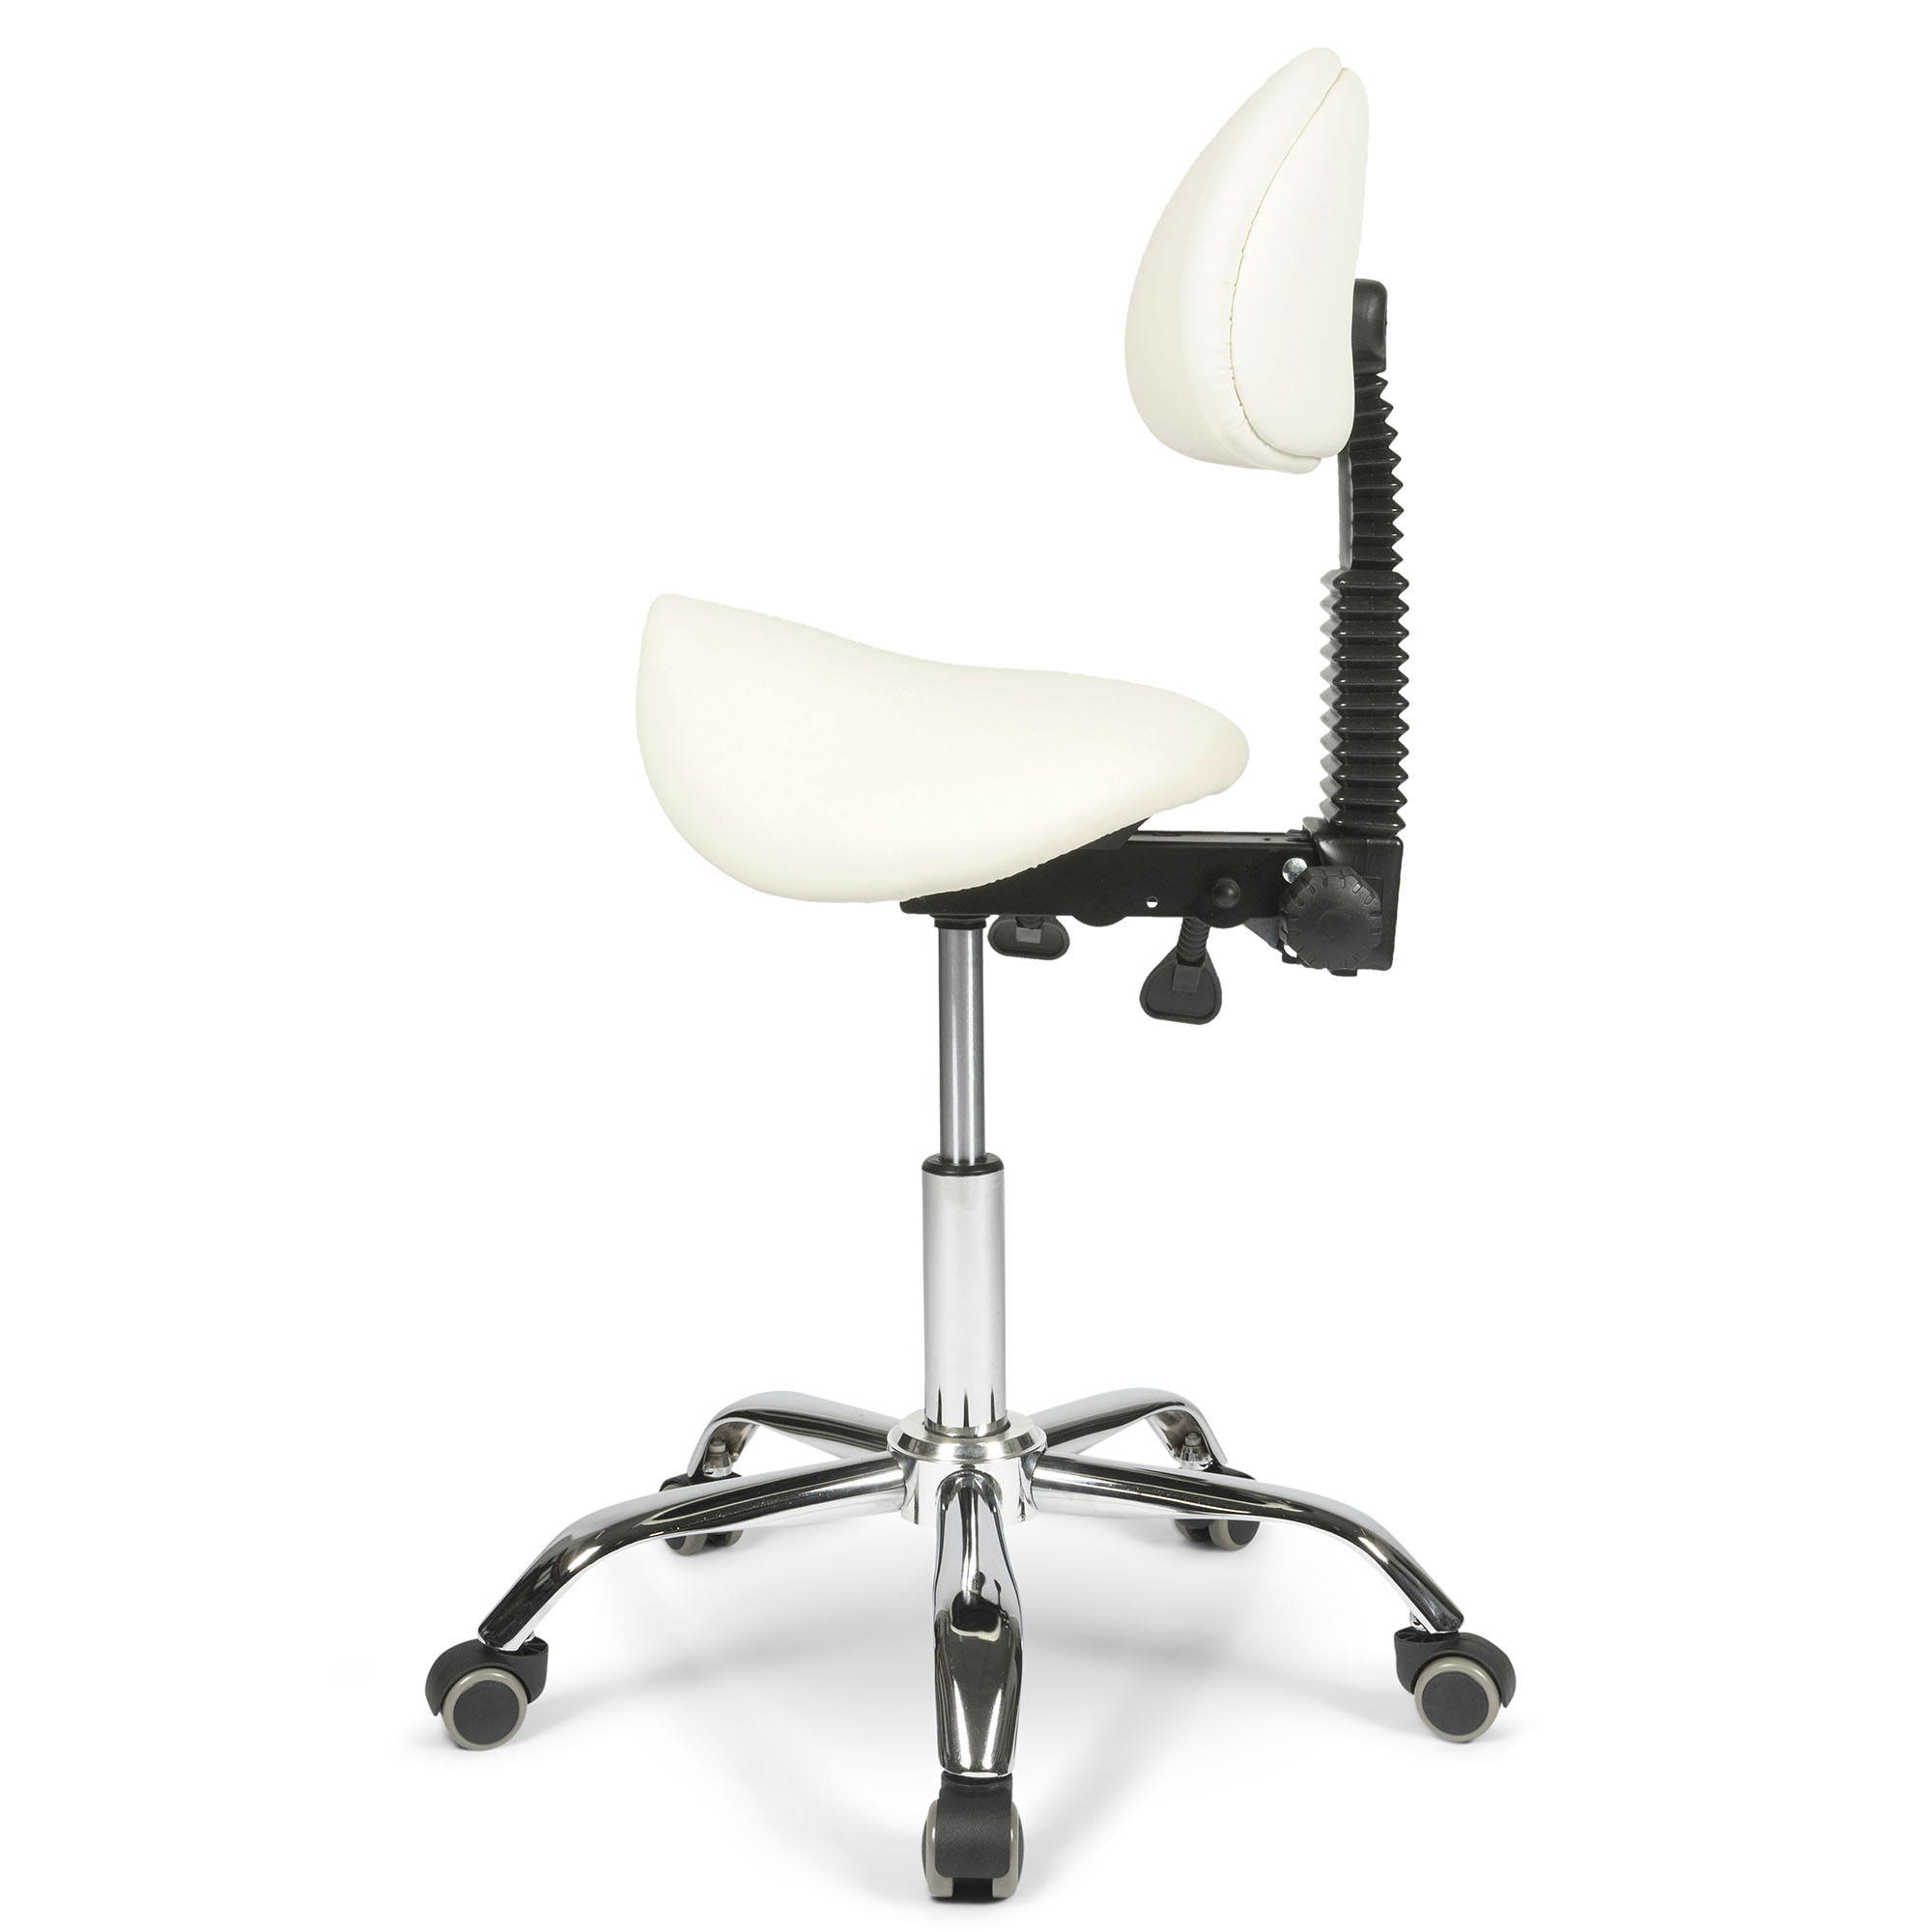 adjustment levers of the white saddle stool with backrest